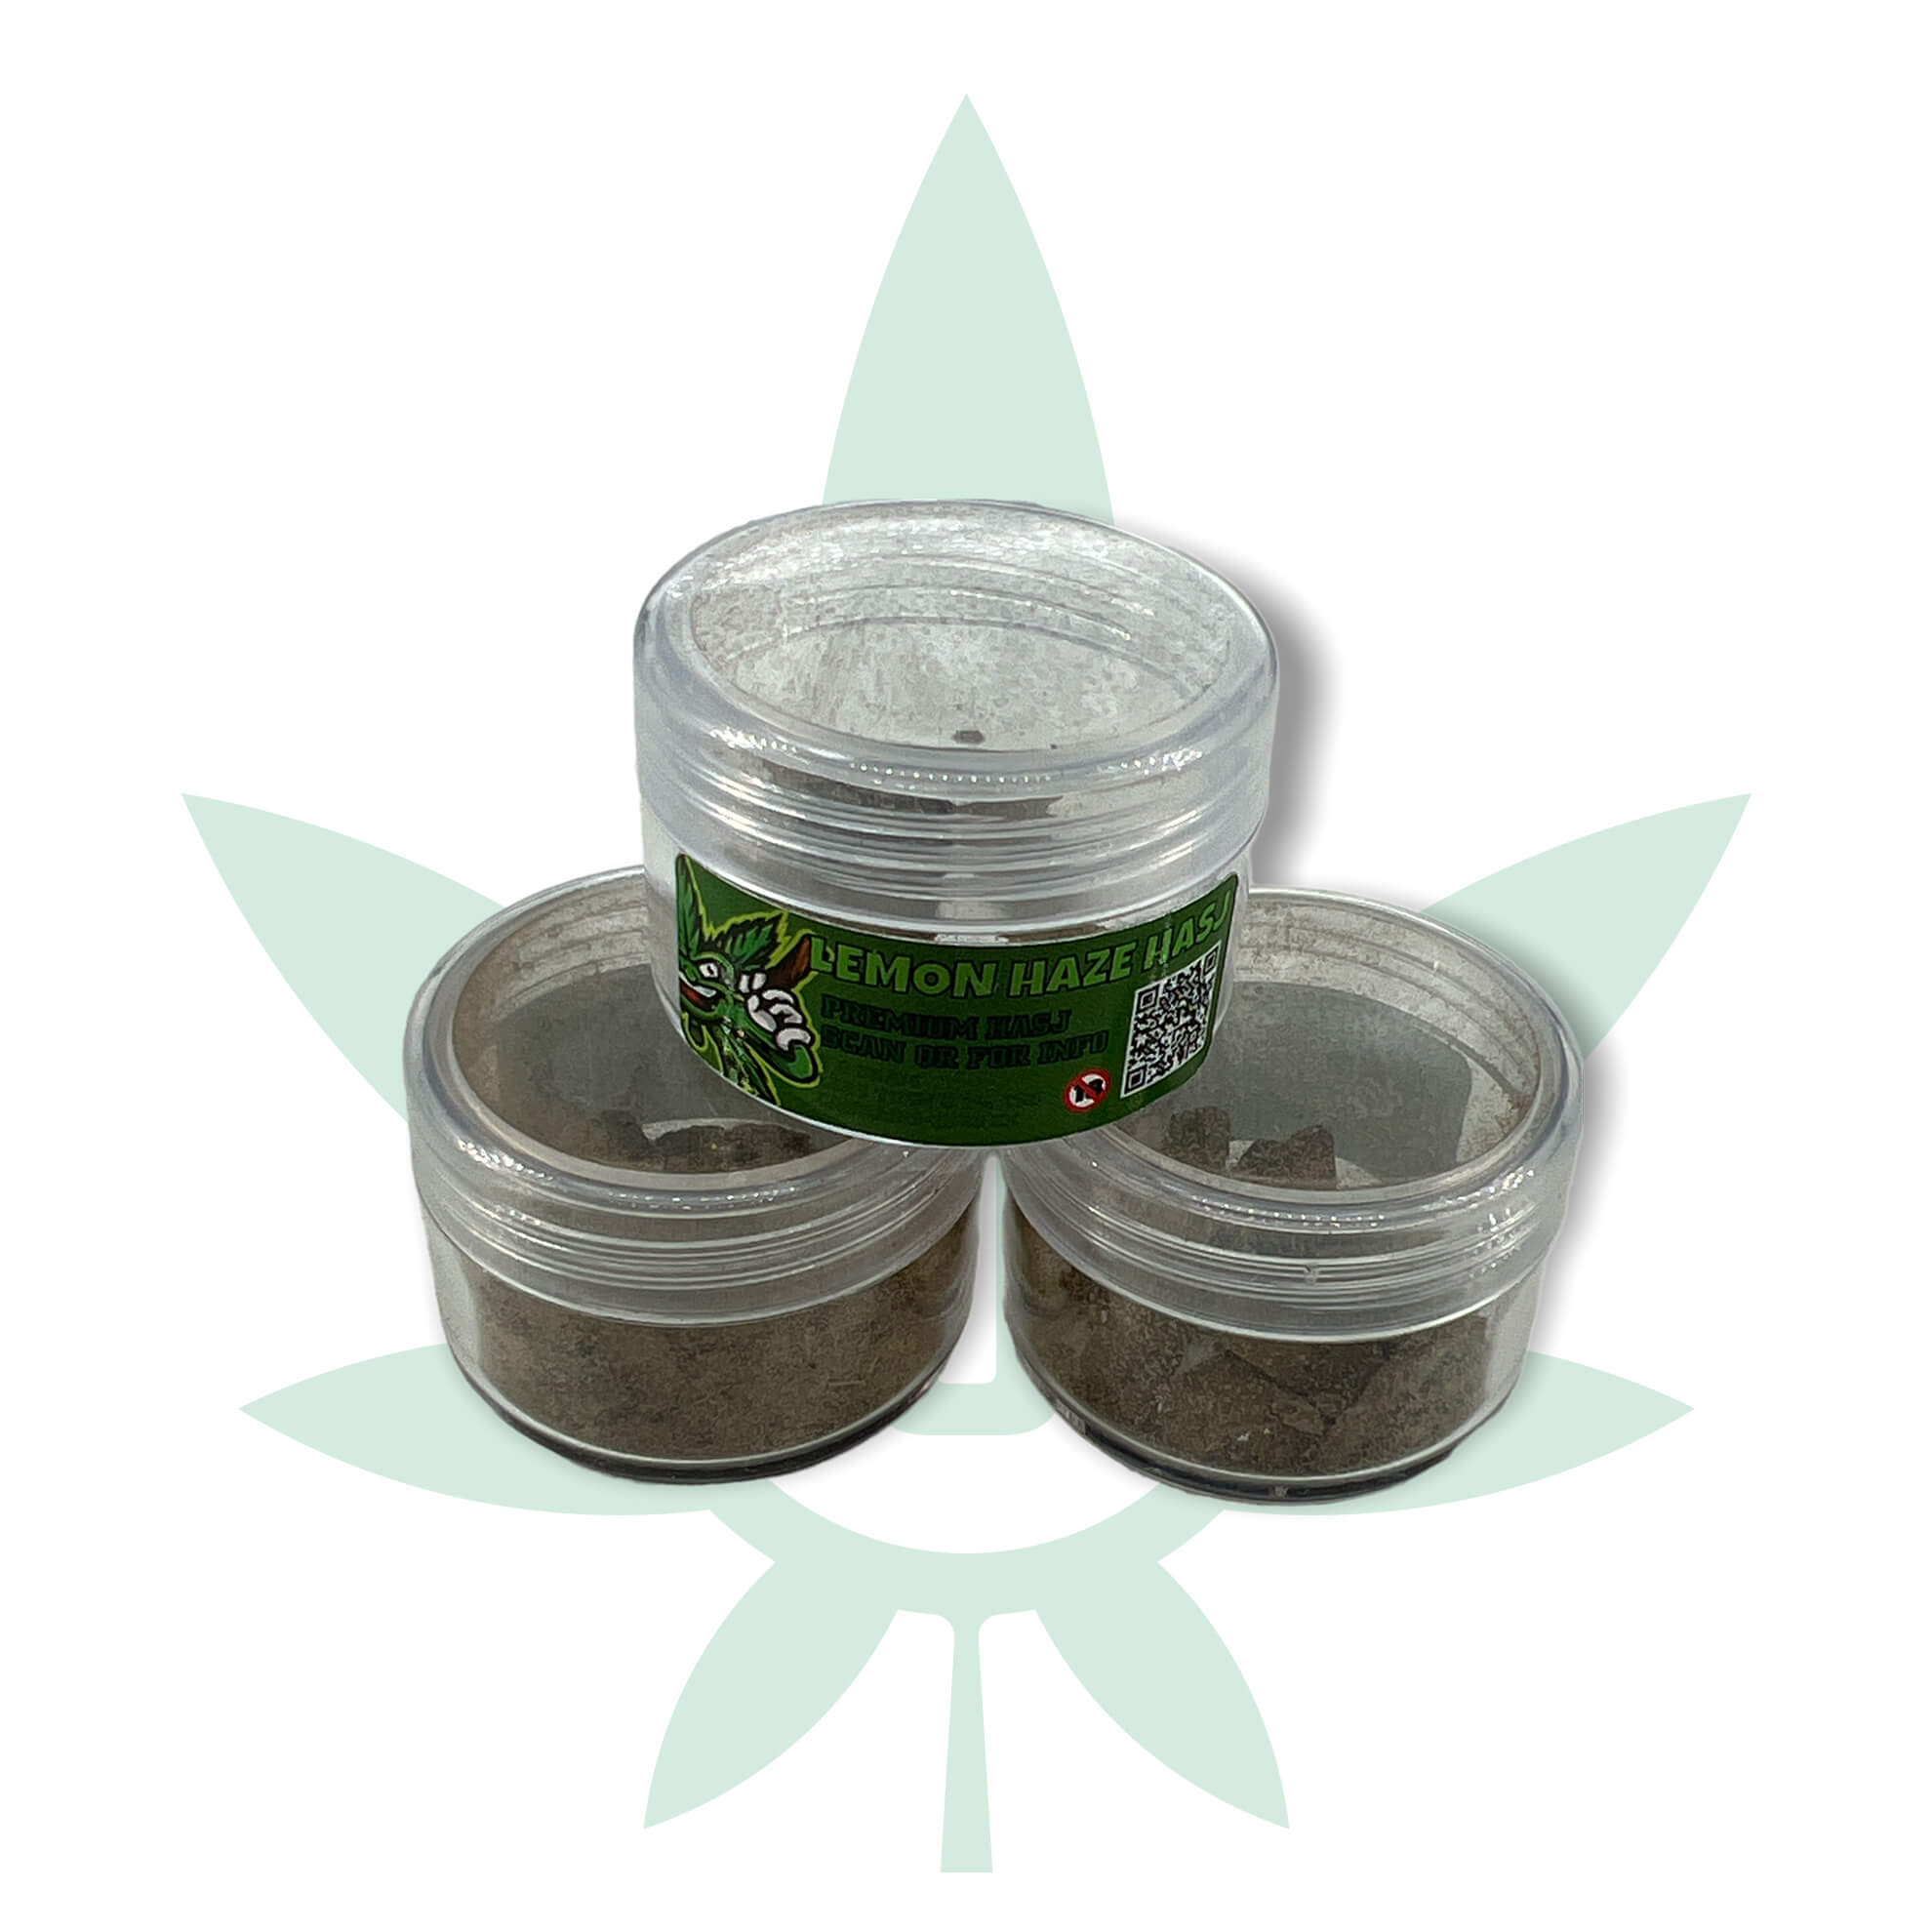 Cannabis Zero - Lemon Haze Hasj 1 gram jar